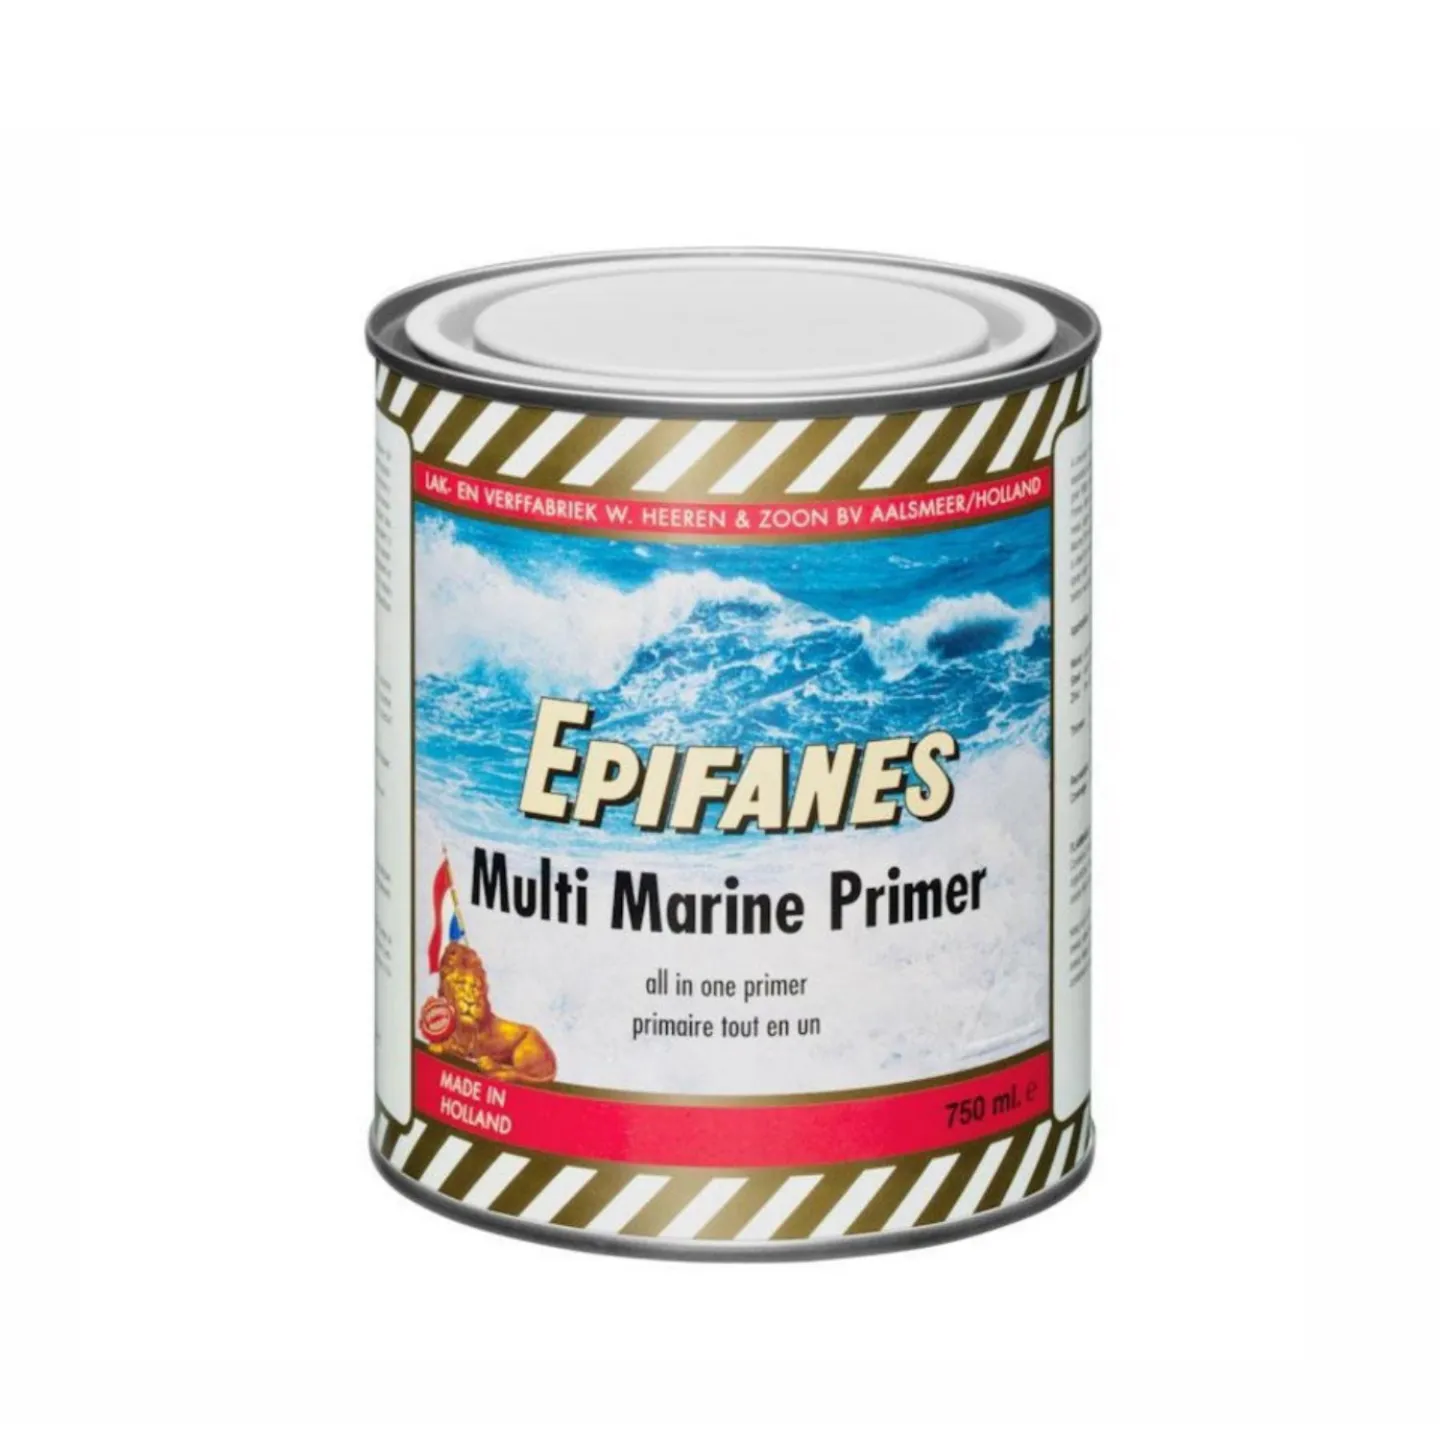 Epifanes multi marine primer.